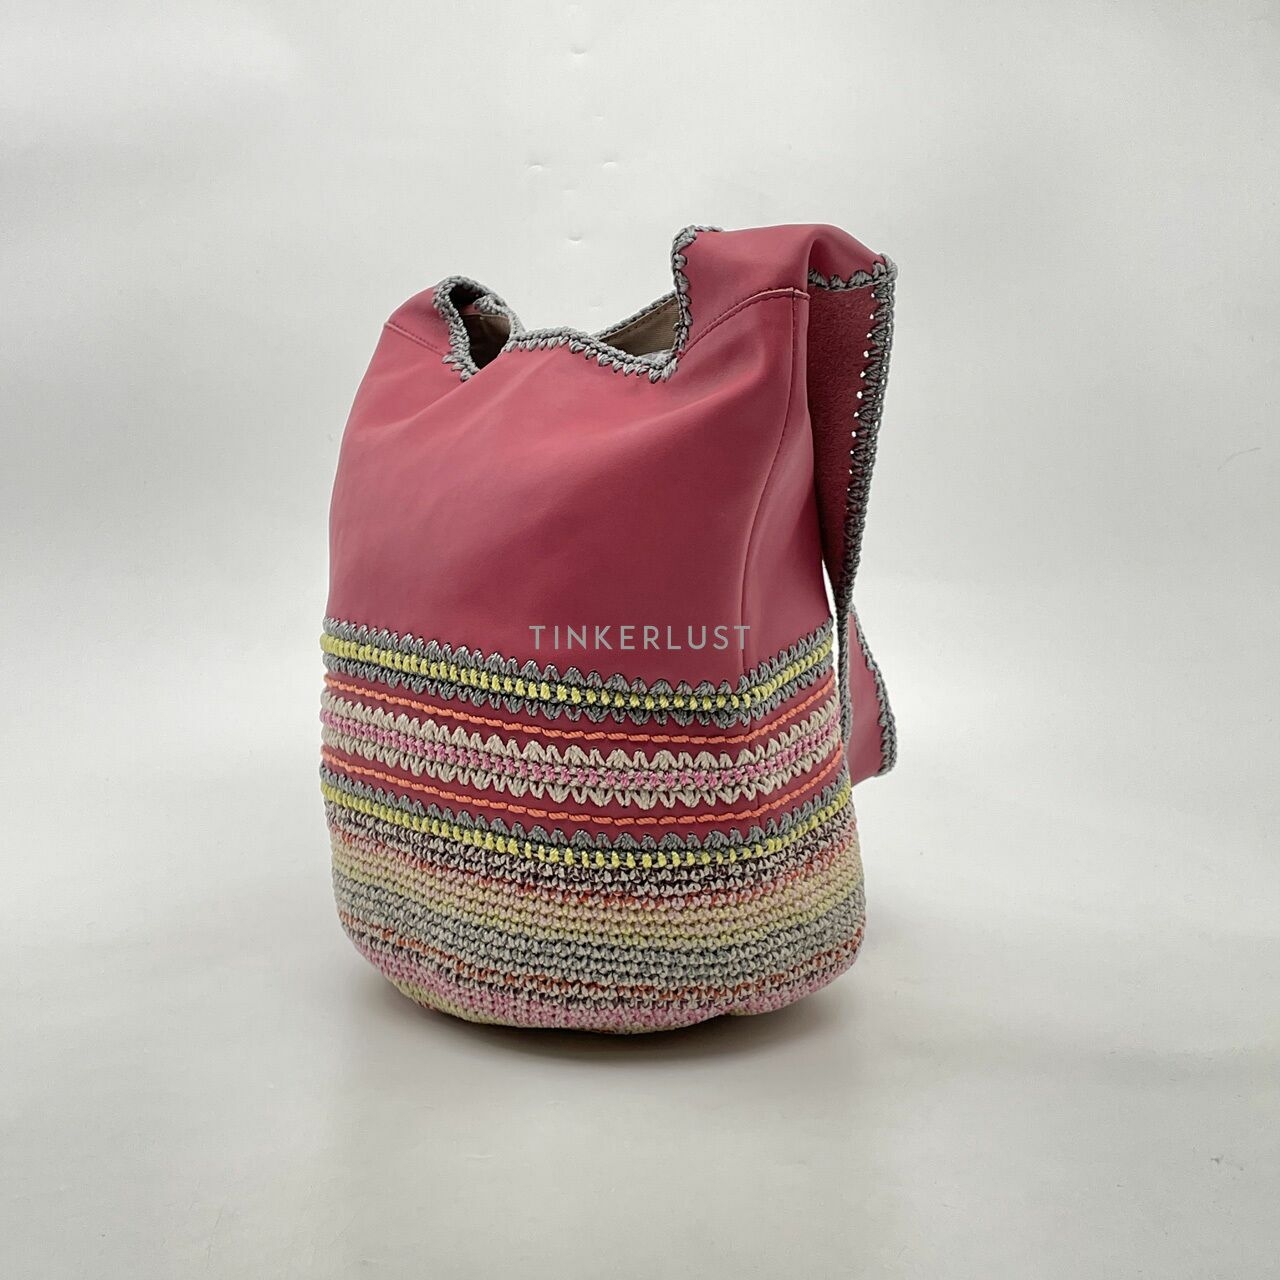 The Sak Dark Pink & Multi Tote Bag